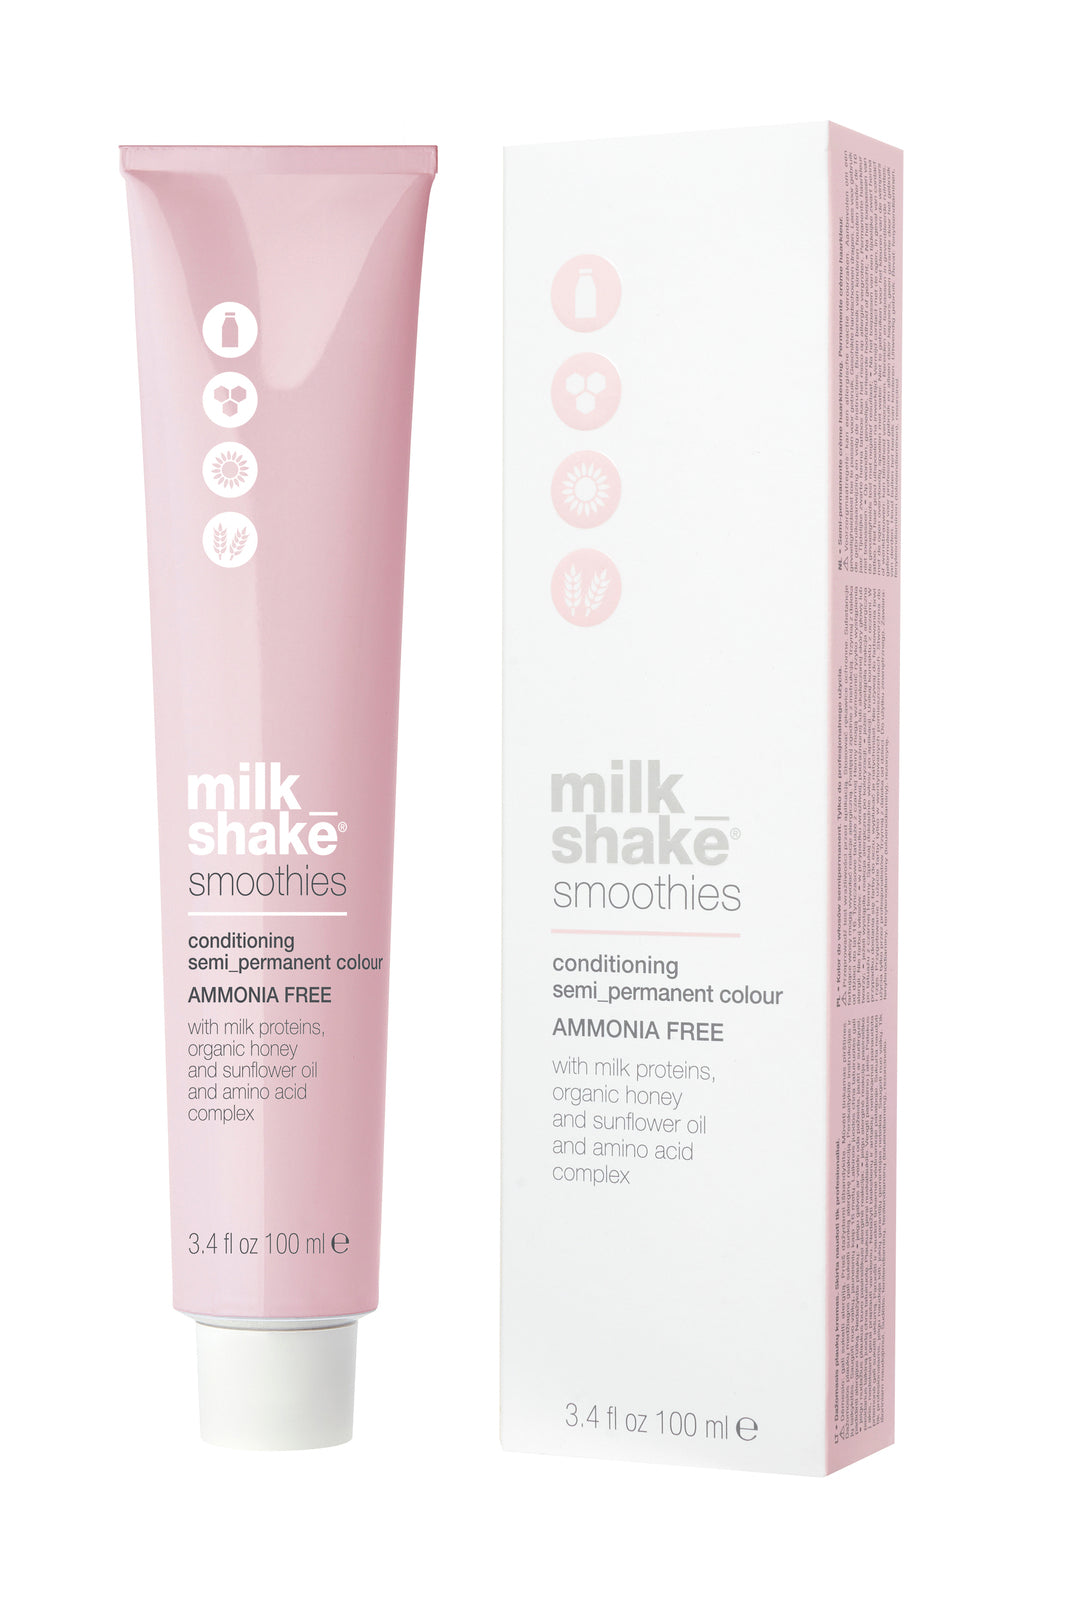 Milkshake smoothies semi-permanent color ORCHID